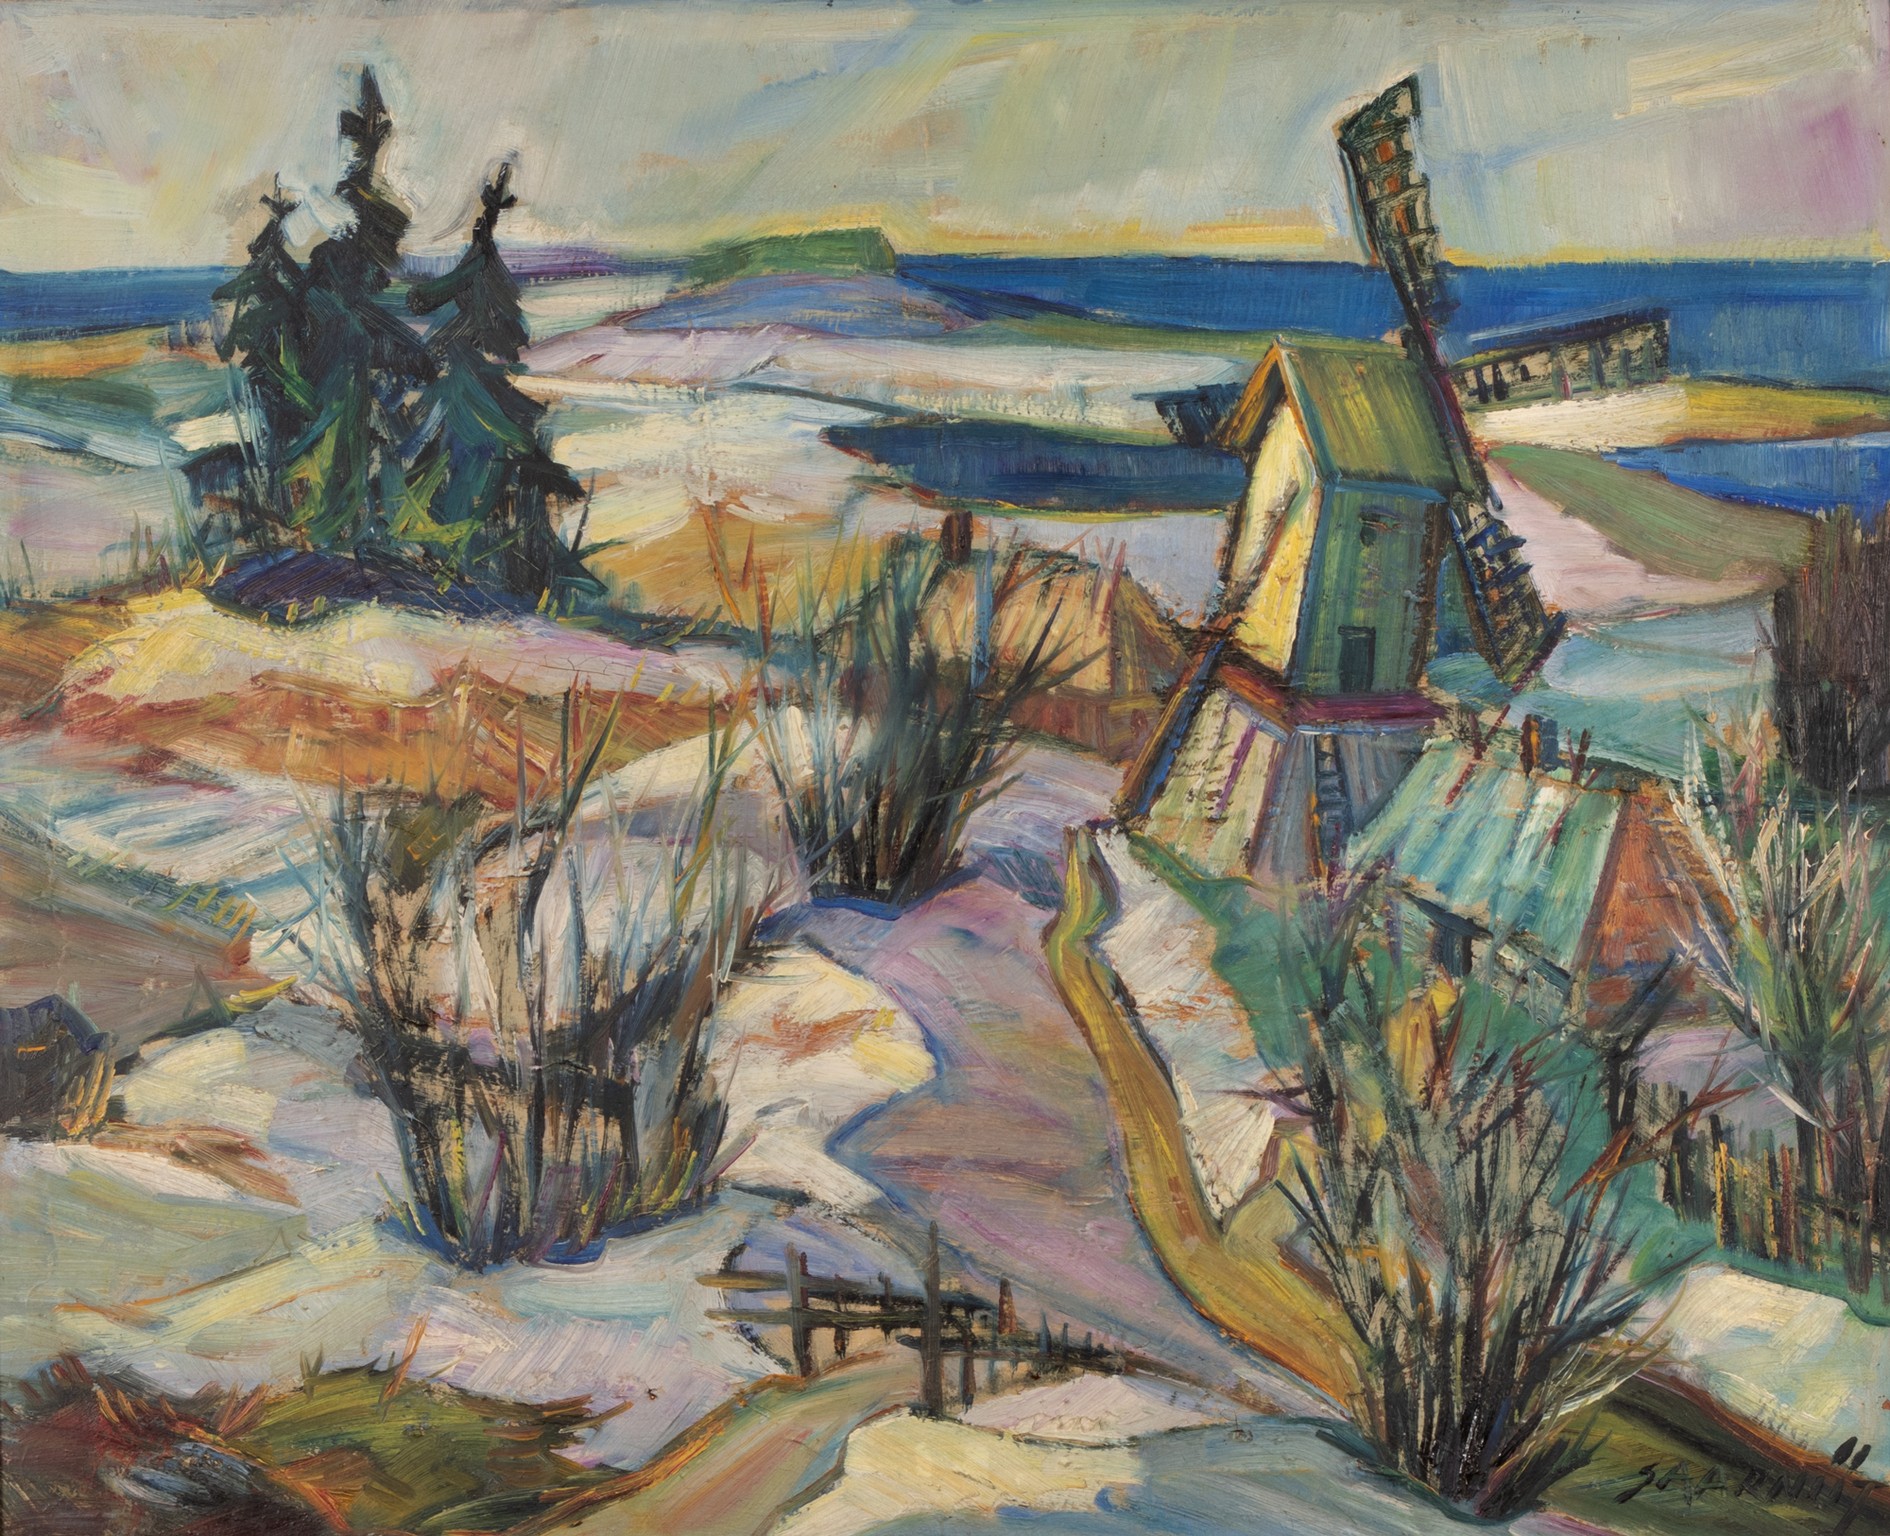 Joann Voldemar Saarniit "Landscape With Windmill"